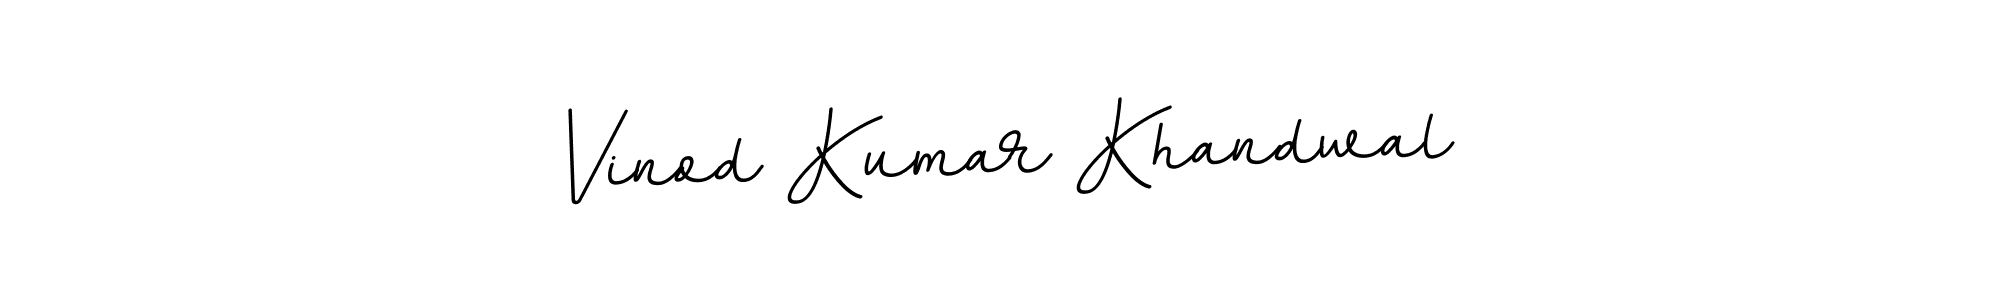 How to Draw Vinod Kumar Khandwal signature style? BallpointsItalic-DORy9 is a latest design signature styles for name Vinod Kumar Khandwal. Vinod Kumar Khandwal signature style 11 images and pictures png